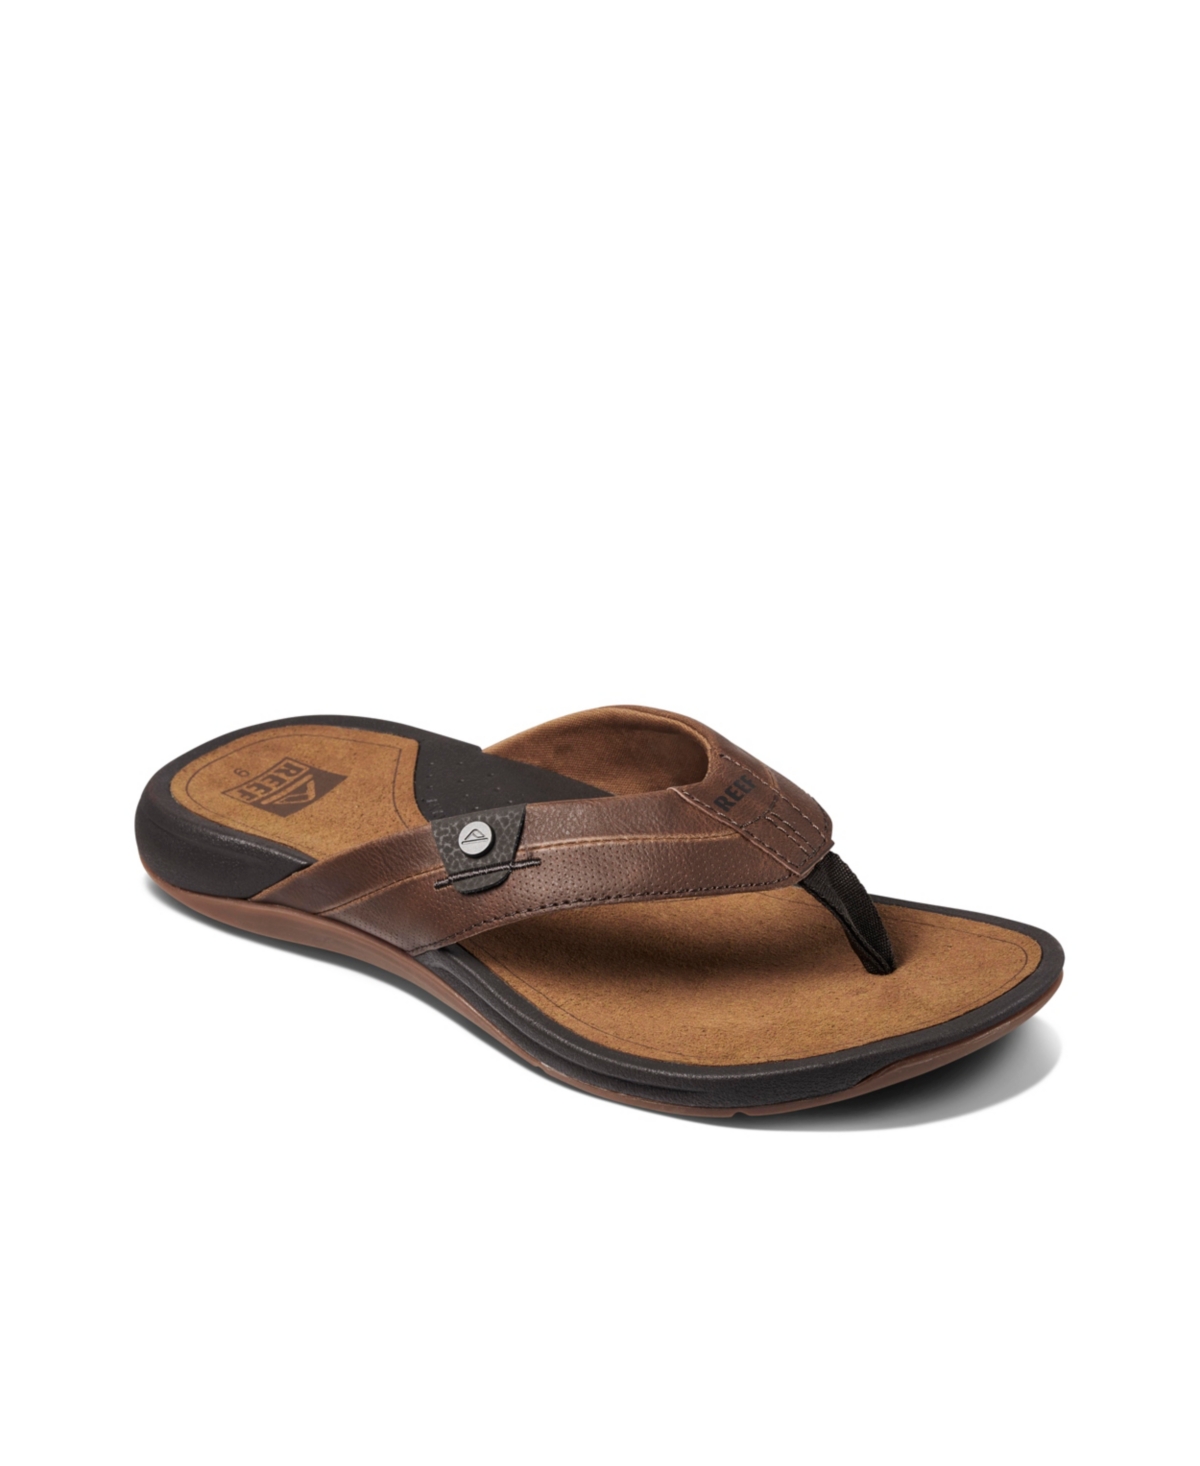 Men's San Onofre Slip-On Sandals - Dark Brown, Tan